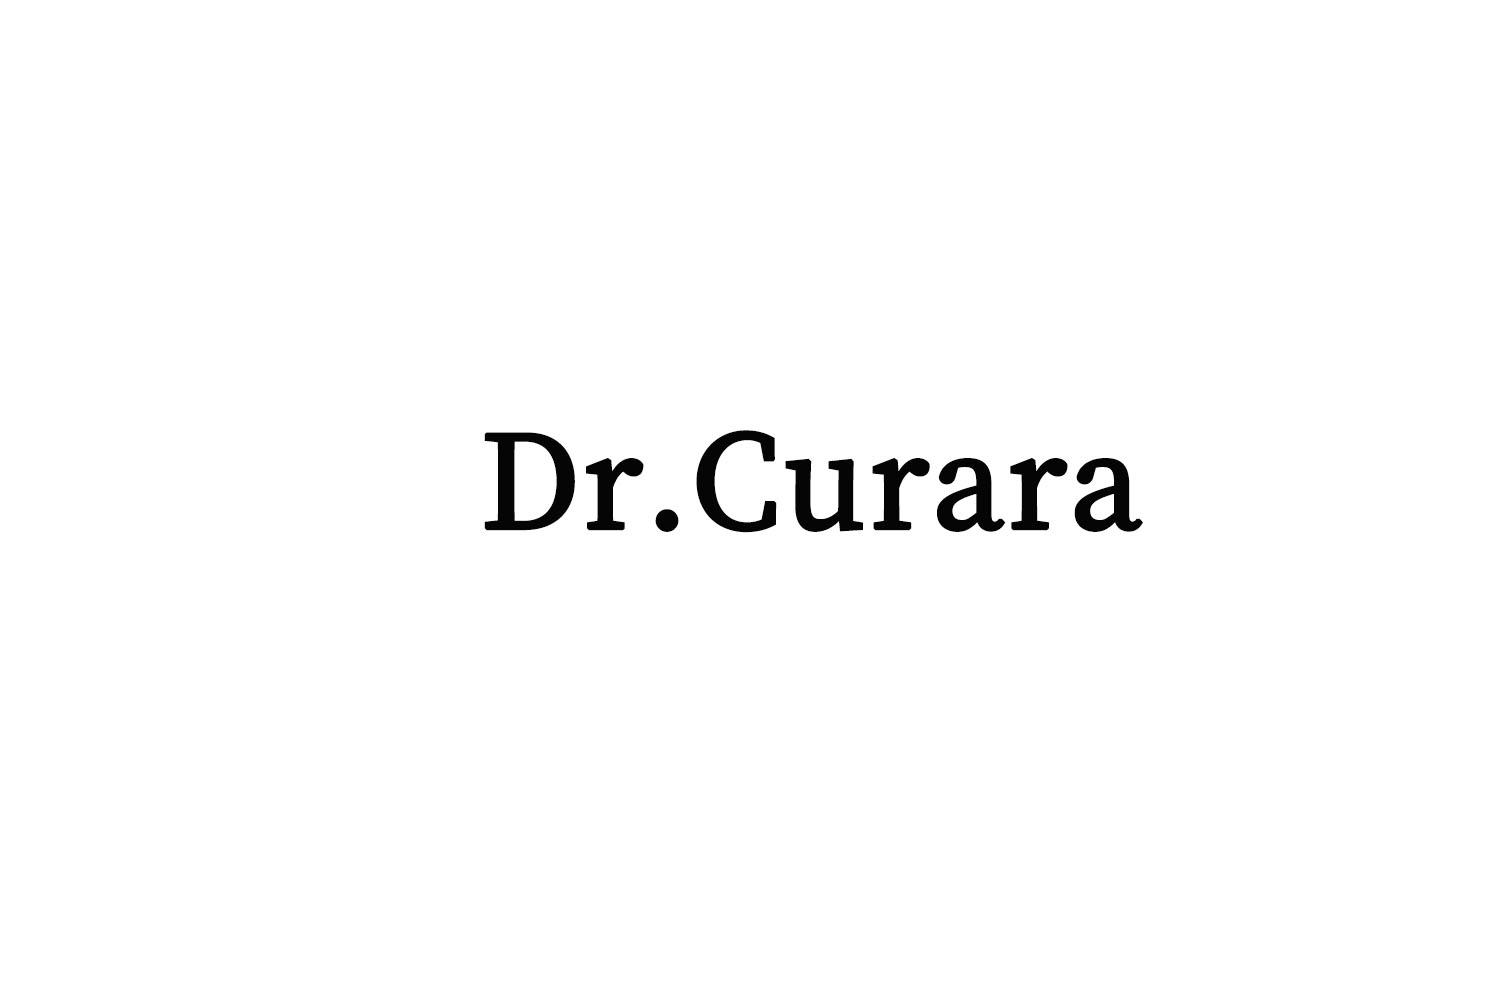 DR.CURARA